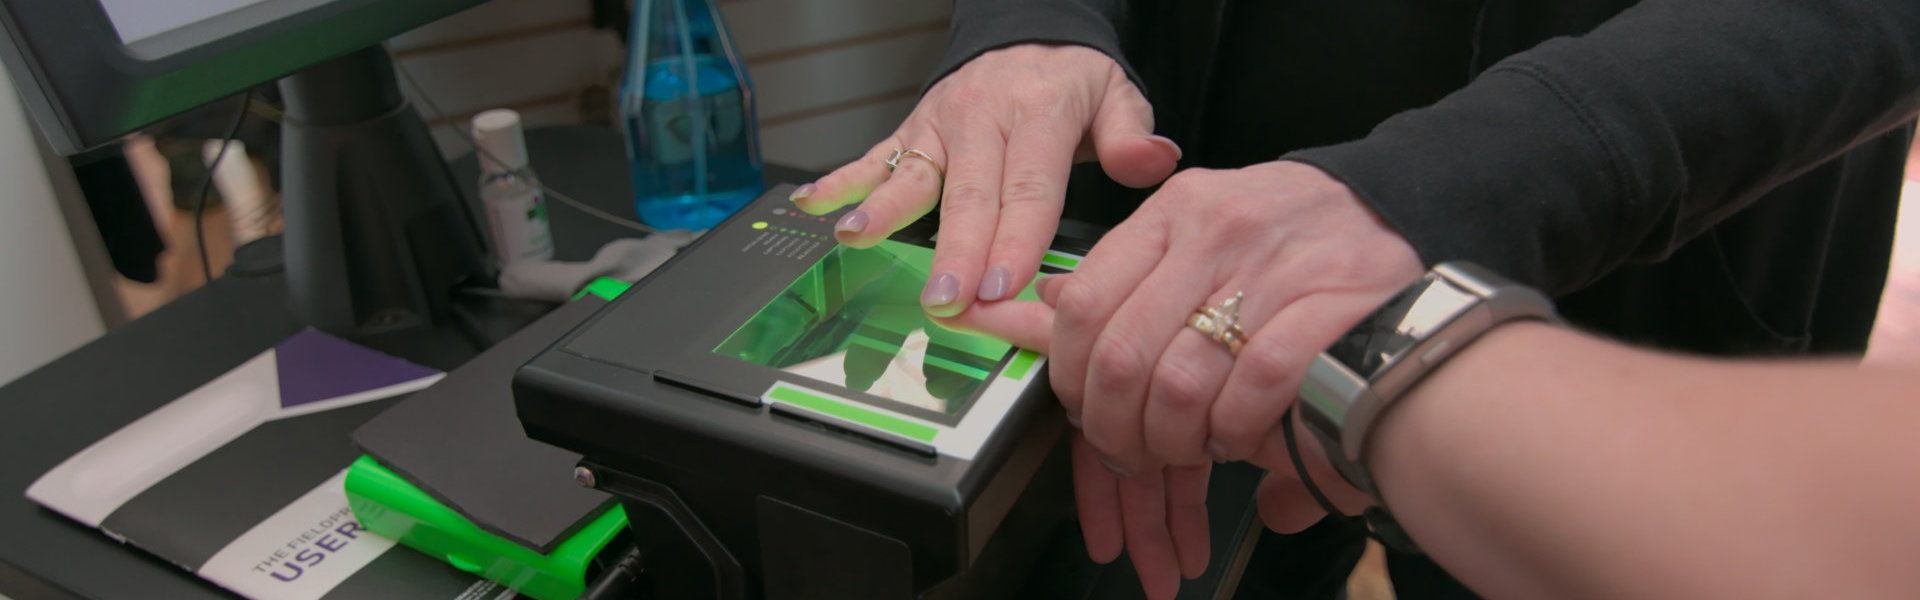 Man using a fingerprint scanner